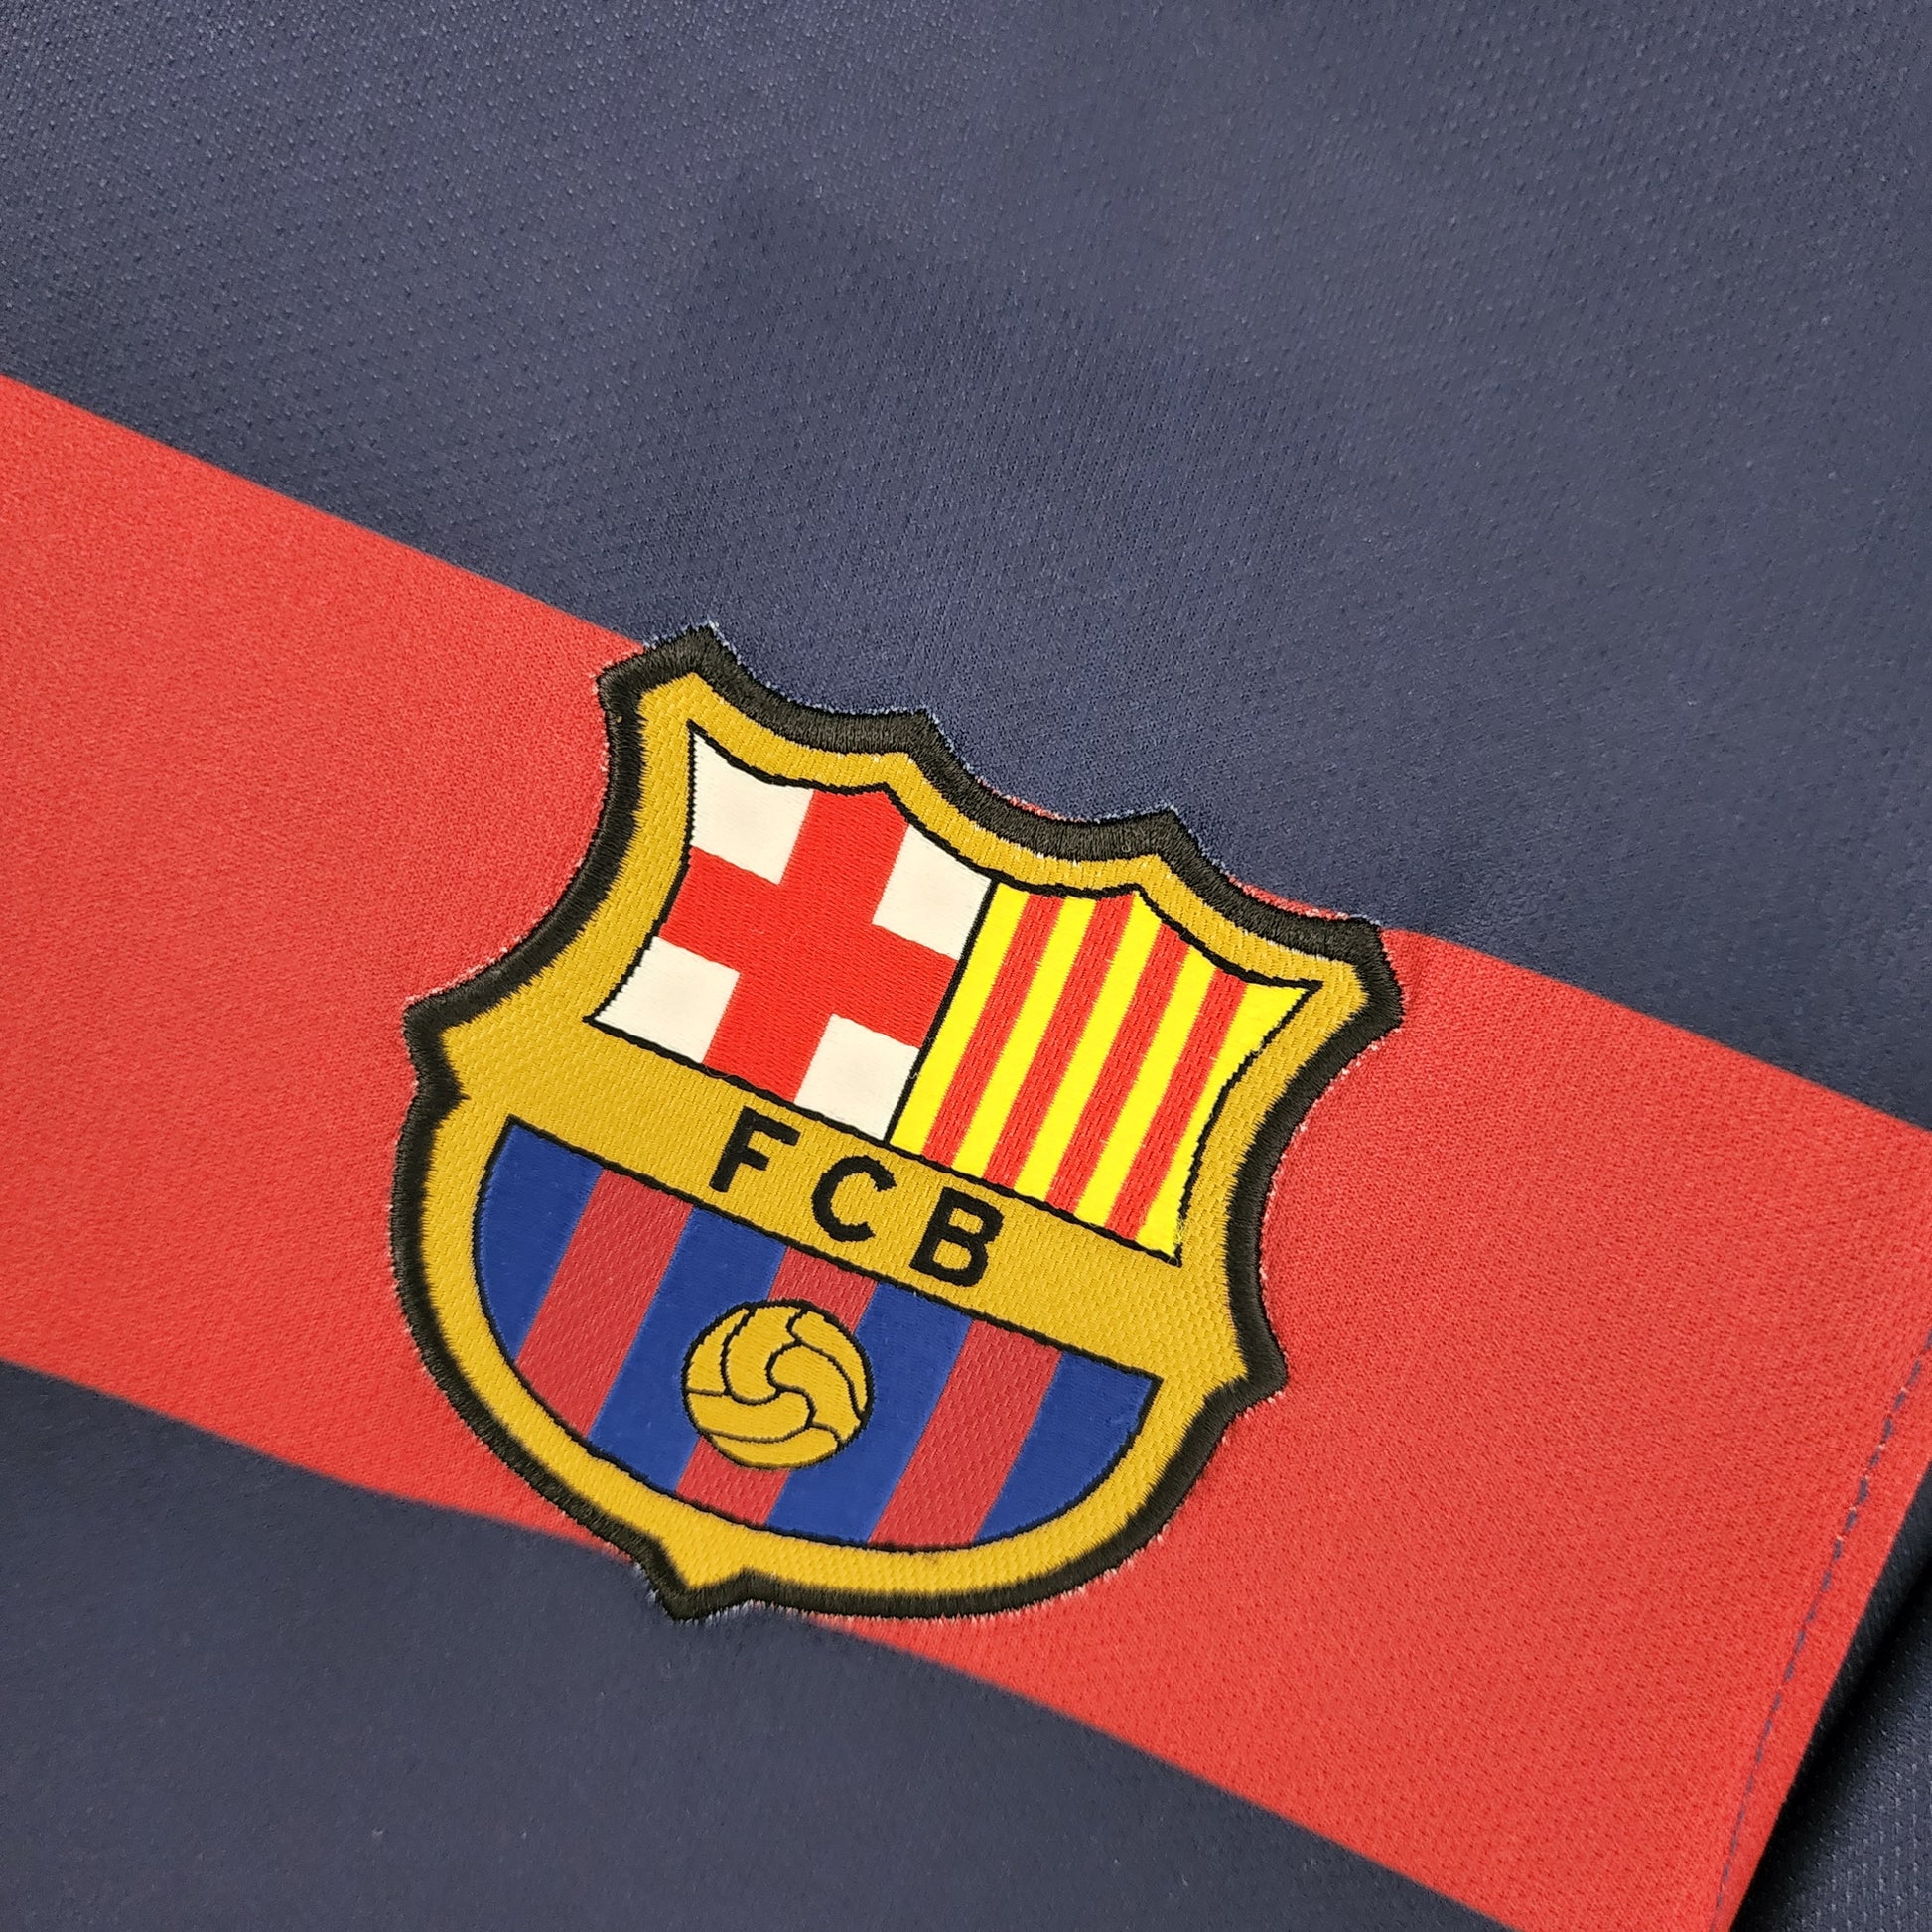 FC Barcelona Home Jersey L/S 2015/16